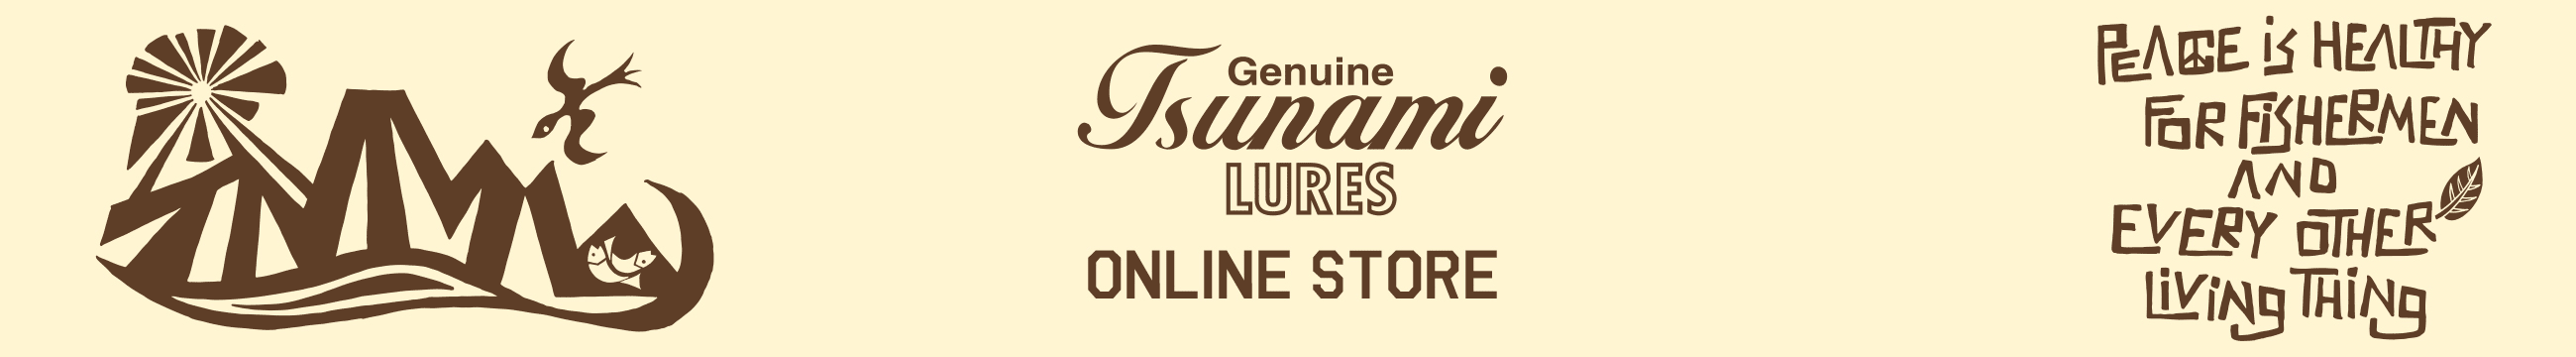 Tsunami Lures Online Shop